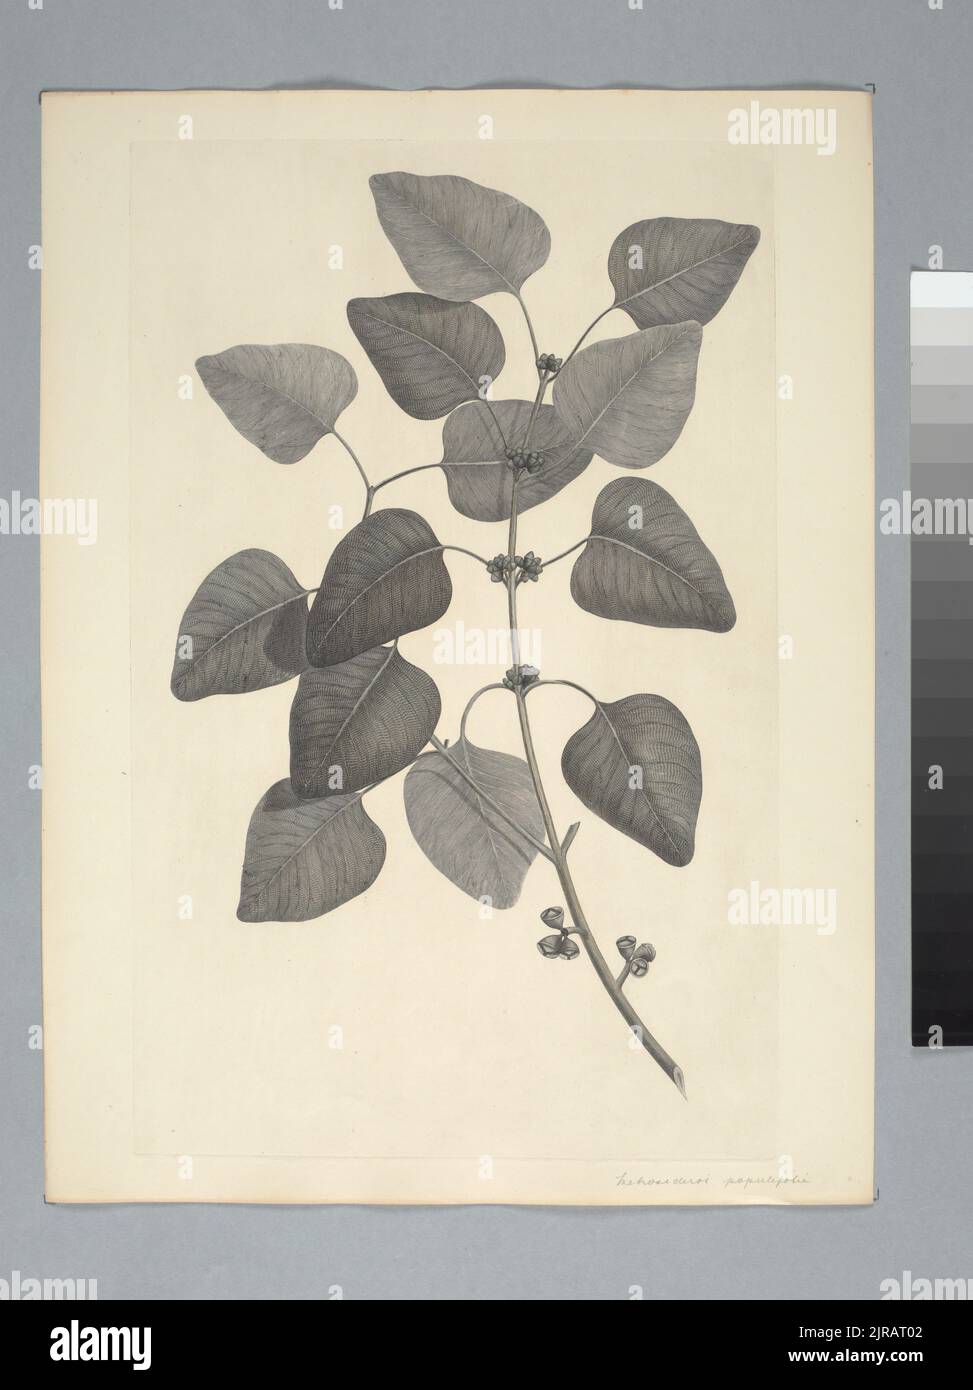 Eucalyptus alba Reinwardt ex Blume, by Sydney Parkinson. Gift of the British Museum, 1895. Stock Photo